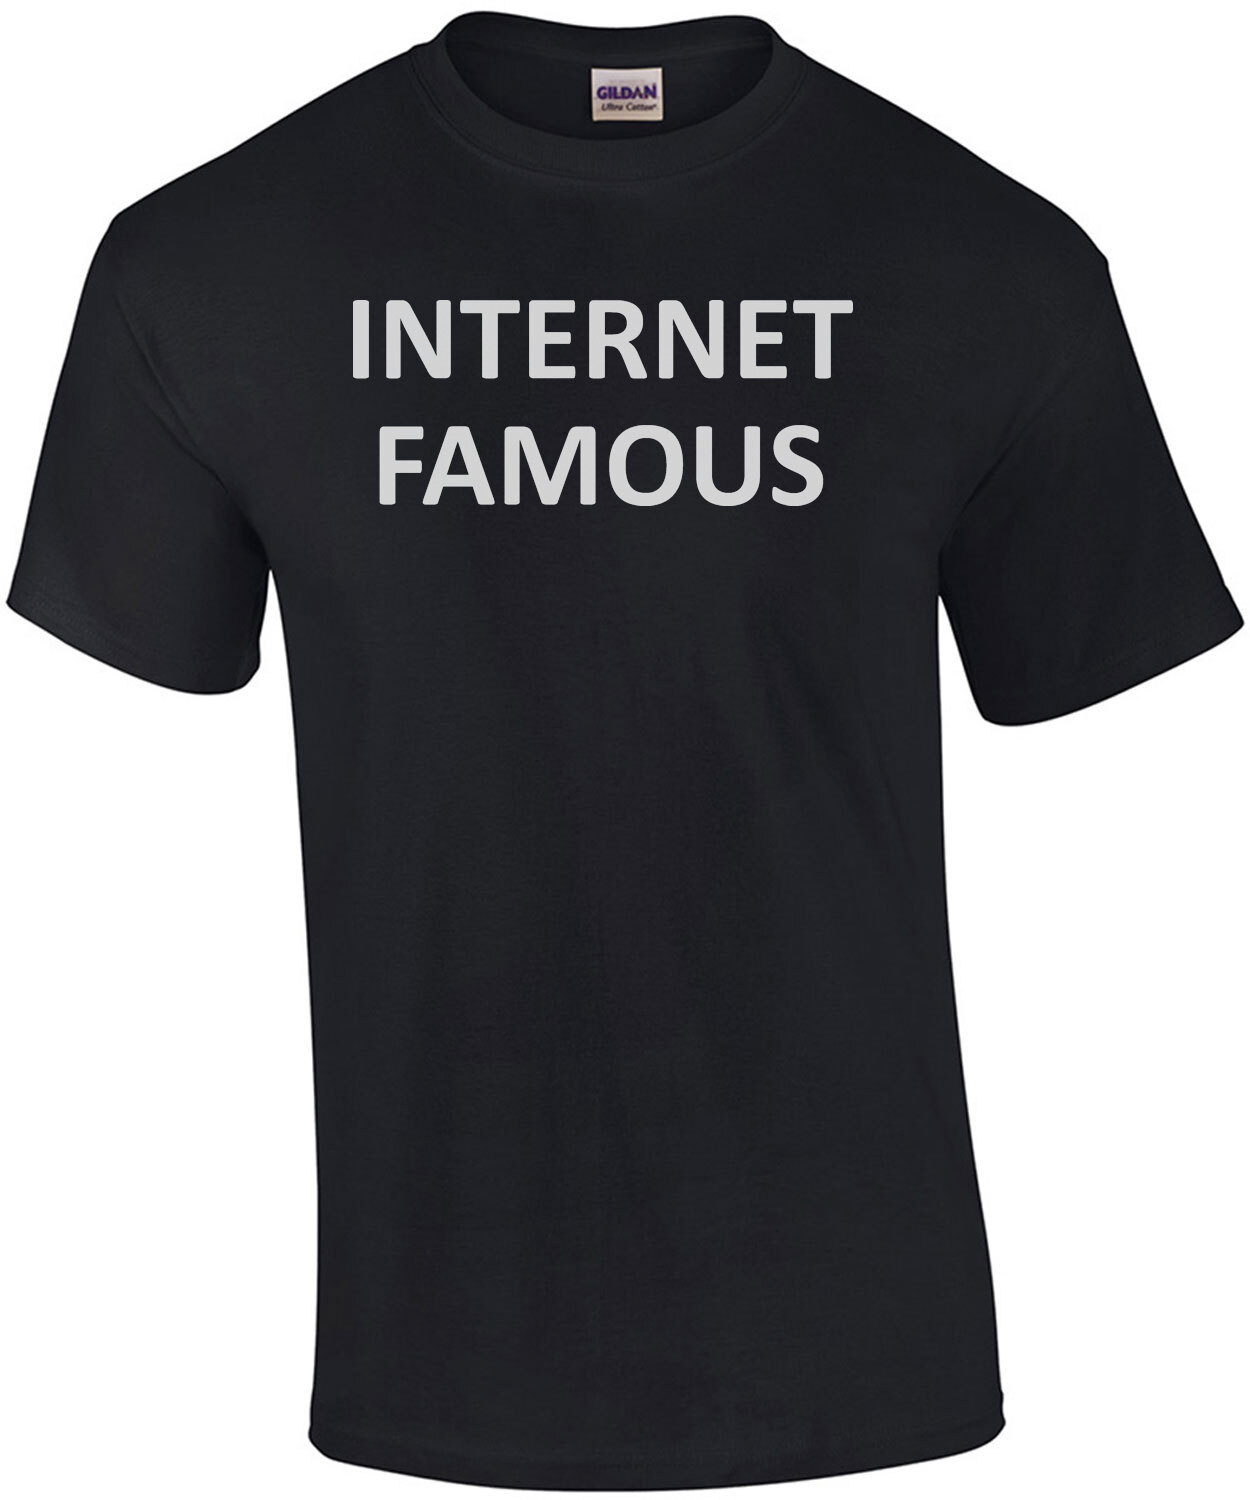 Internet famous - funny t-shirt